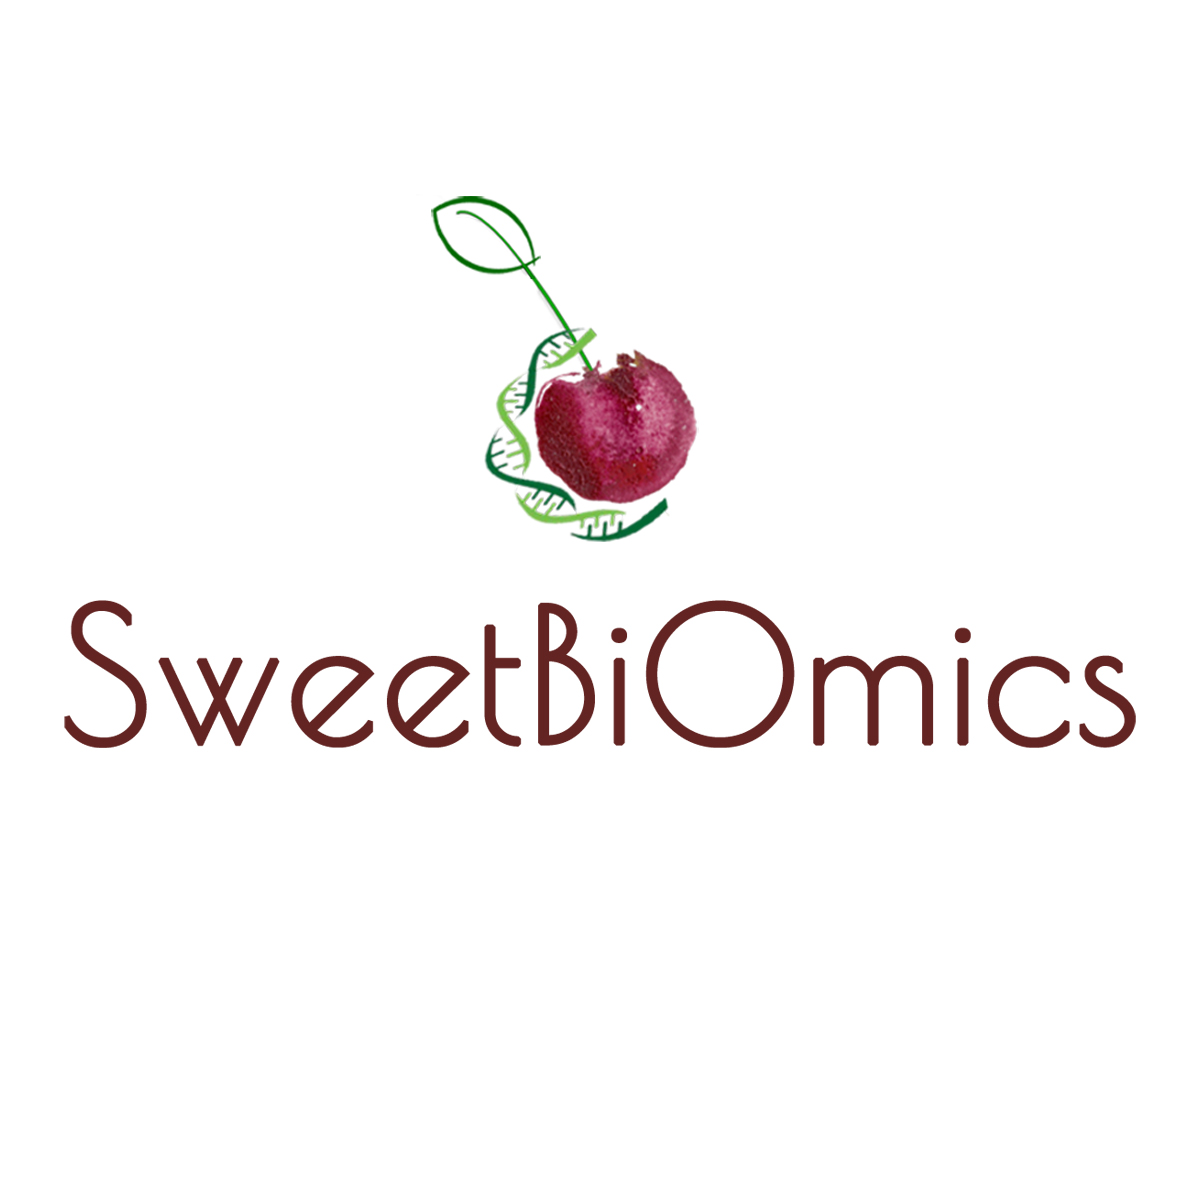 SweetBiOmics: Εκχυλίσματα κερασιού για πολλαπλασιασμό κυττάρων εντόπισαν ερευνητές του ΑΠΘ